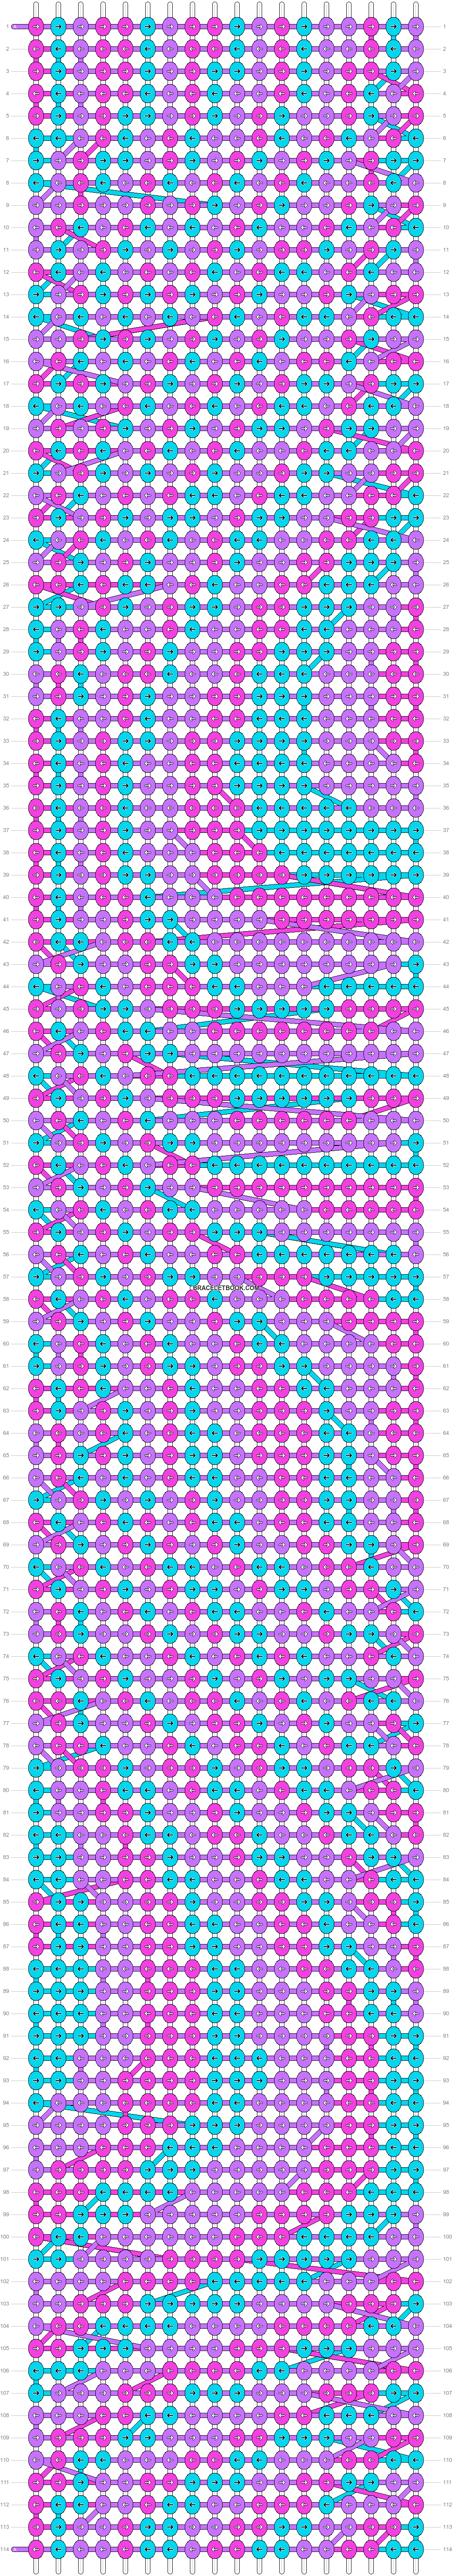 Alpha pattern #80832 variation #147046 pattern